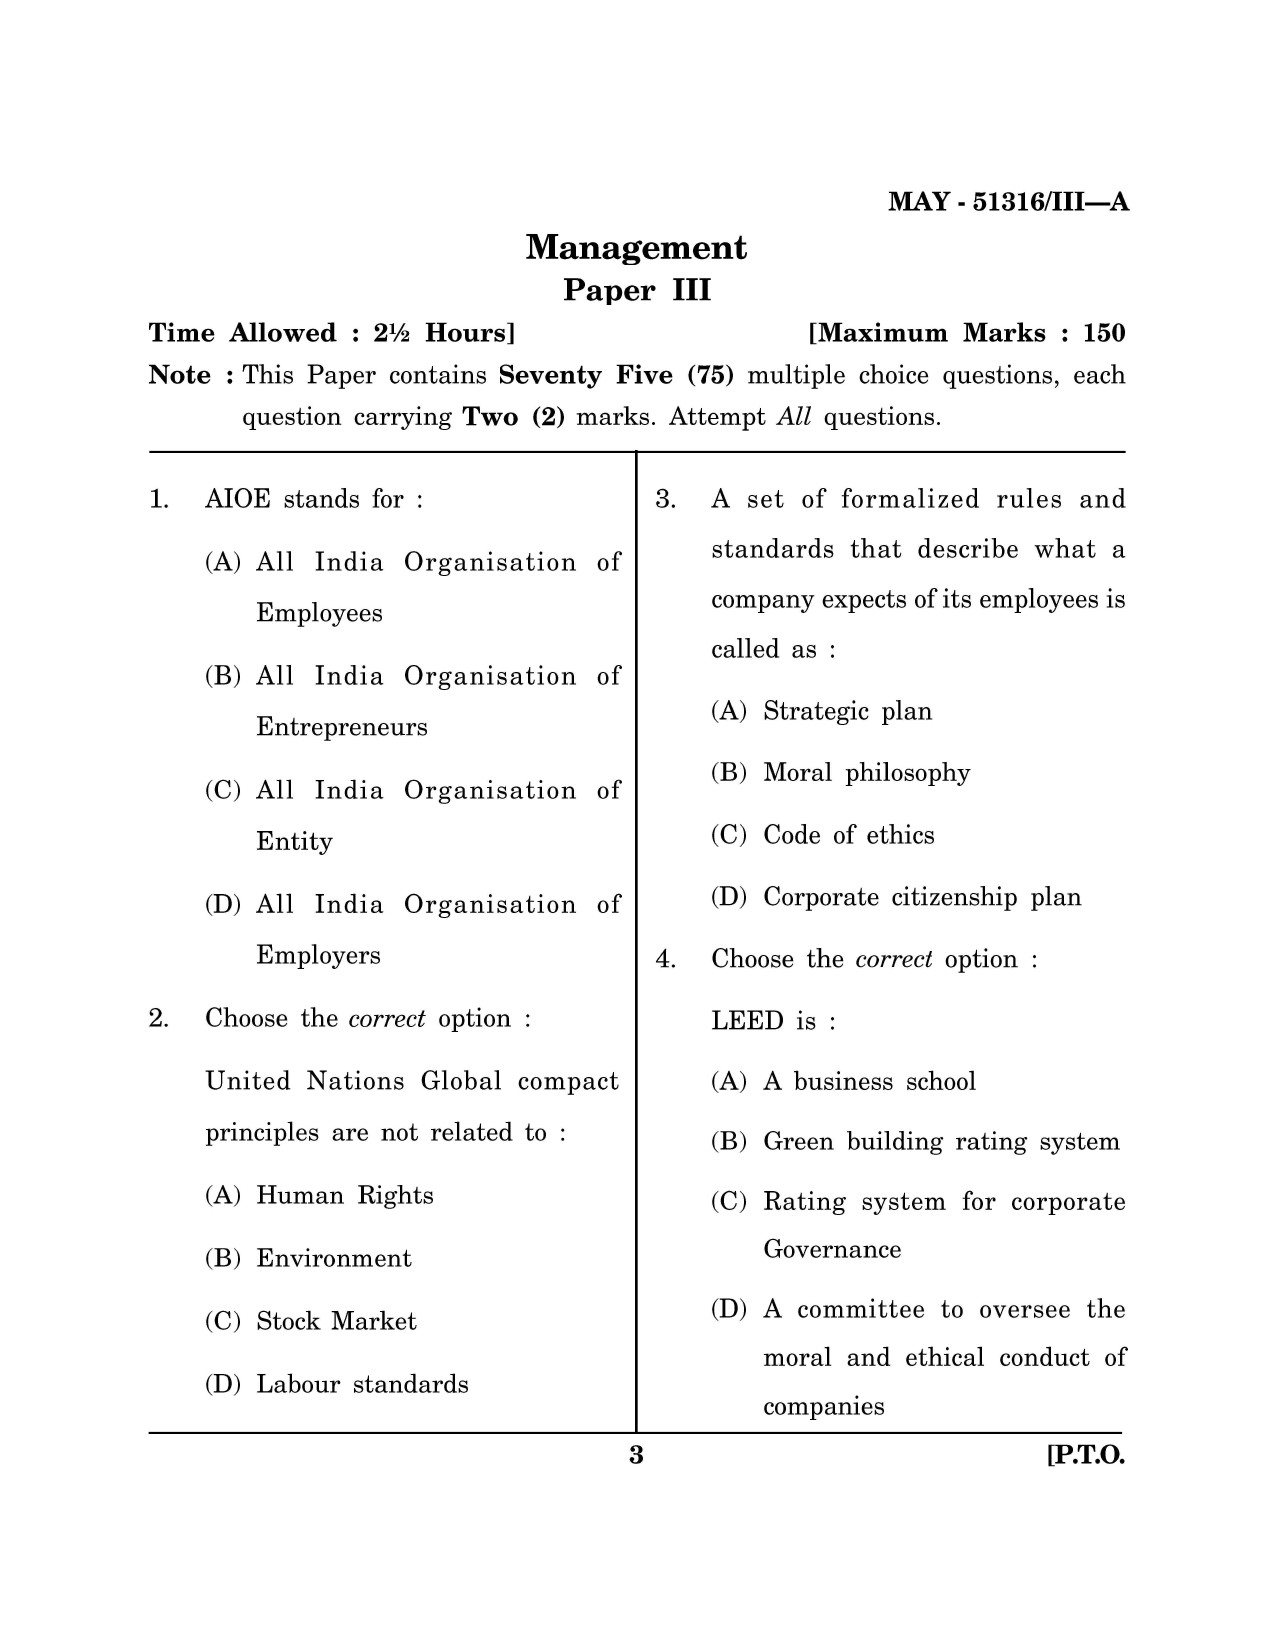 Maharashtra SET Management Question Paper III May 2016 2